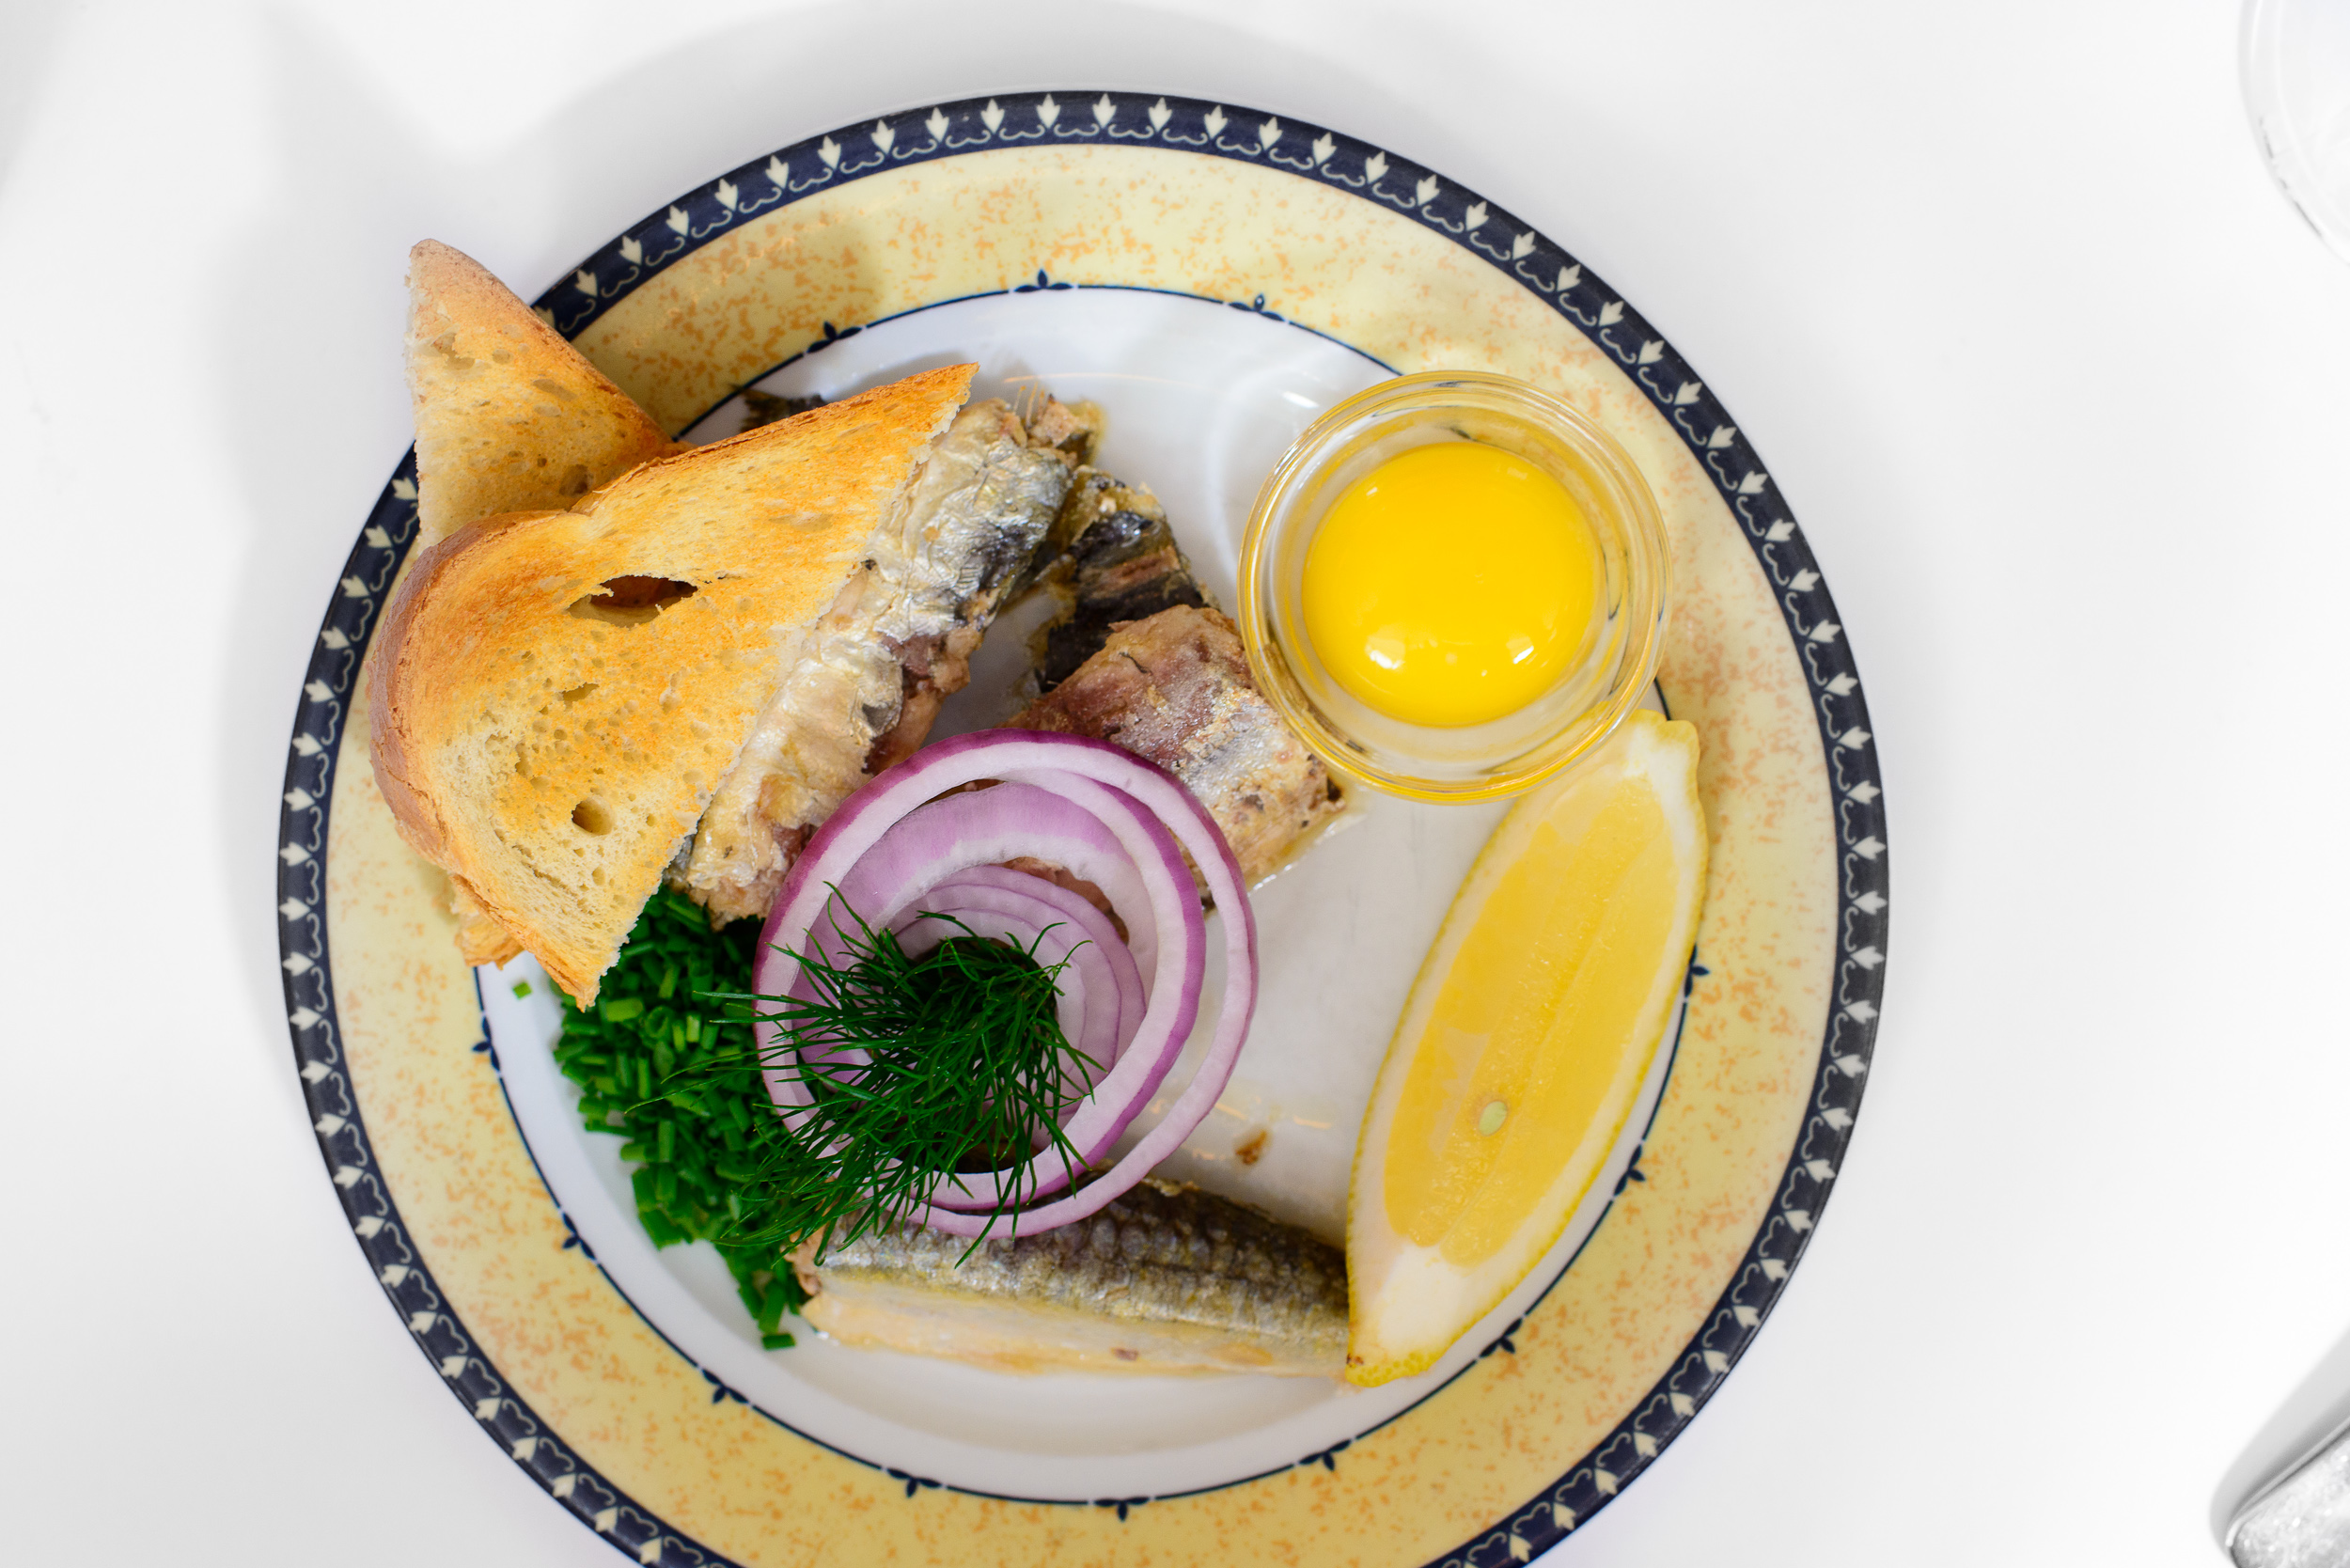 Sardines, raw egg yolk, onions and toast